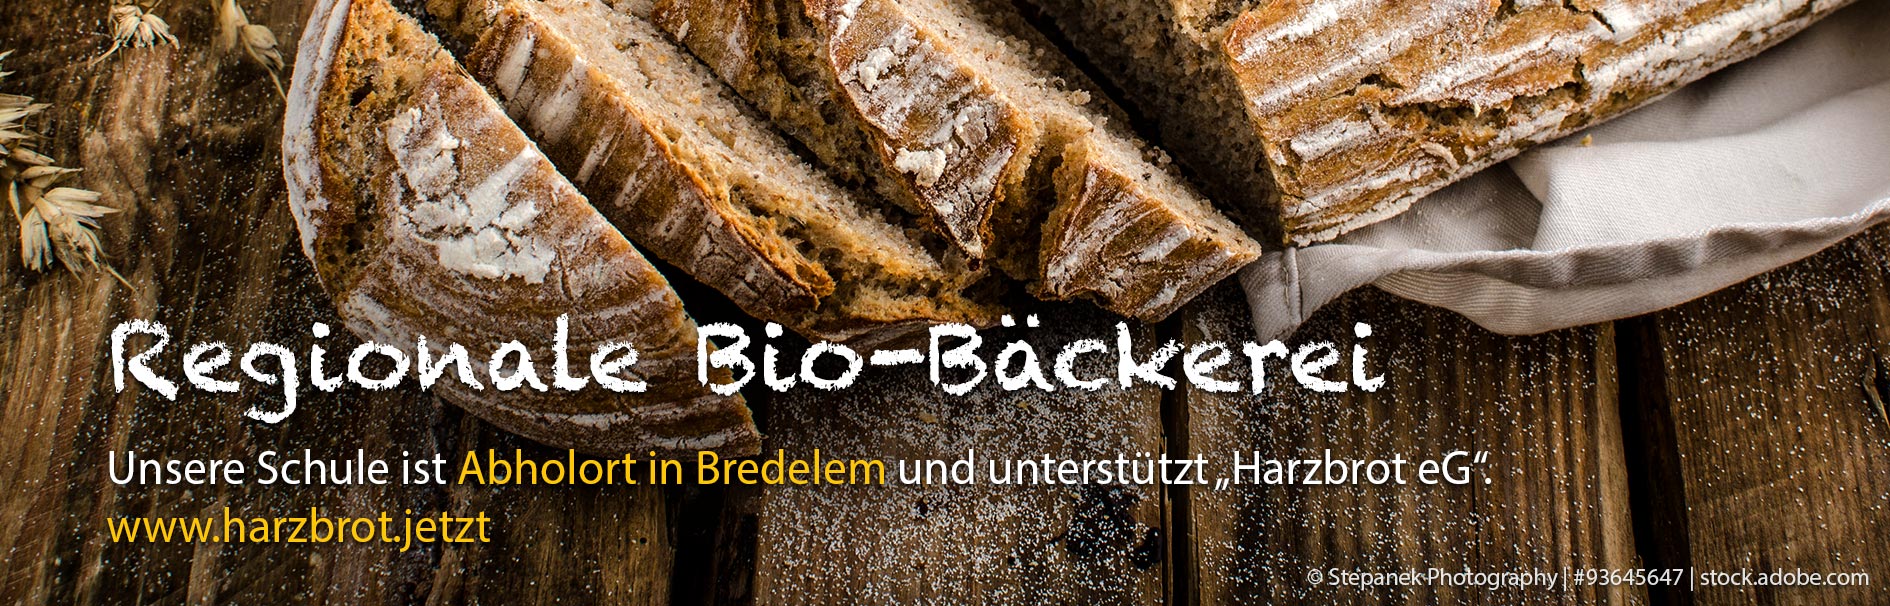 Regionale Bio-Bäckerei Harzbrot